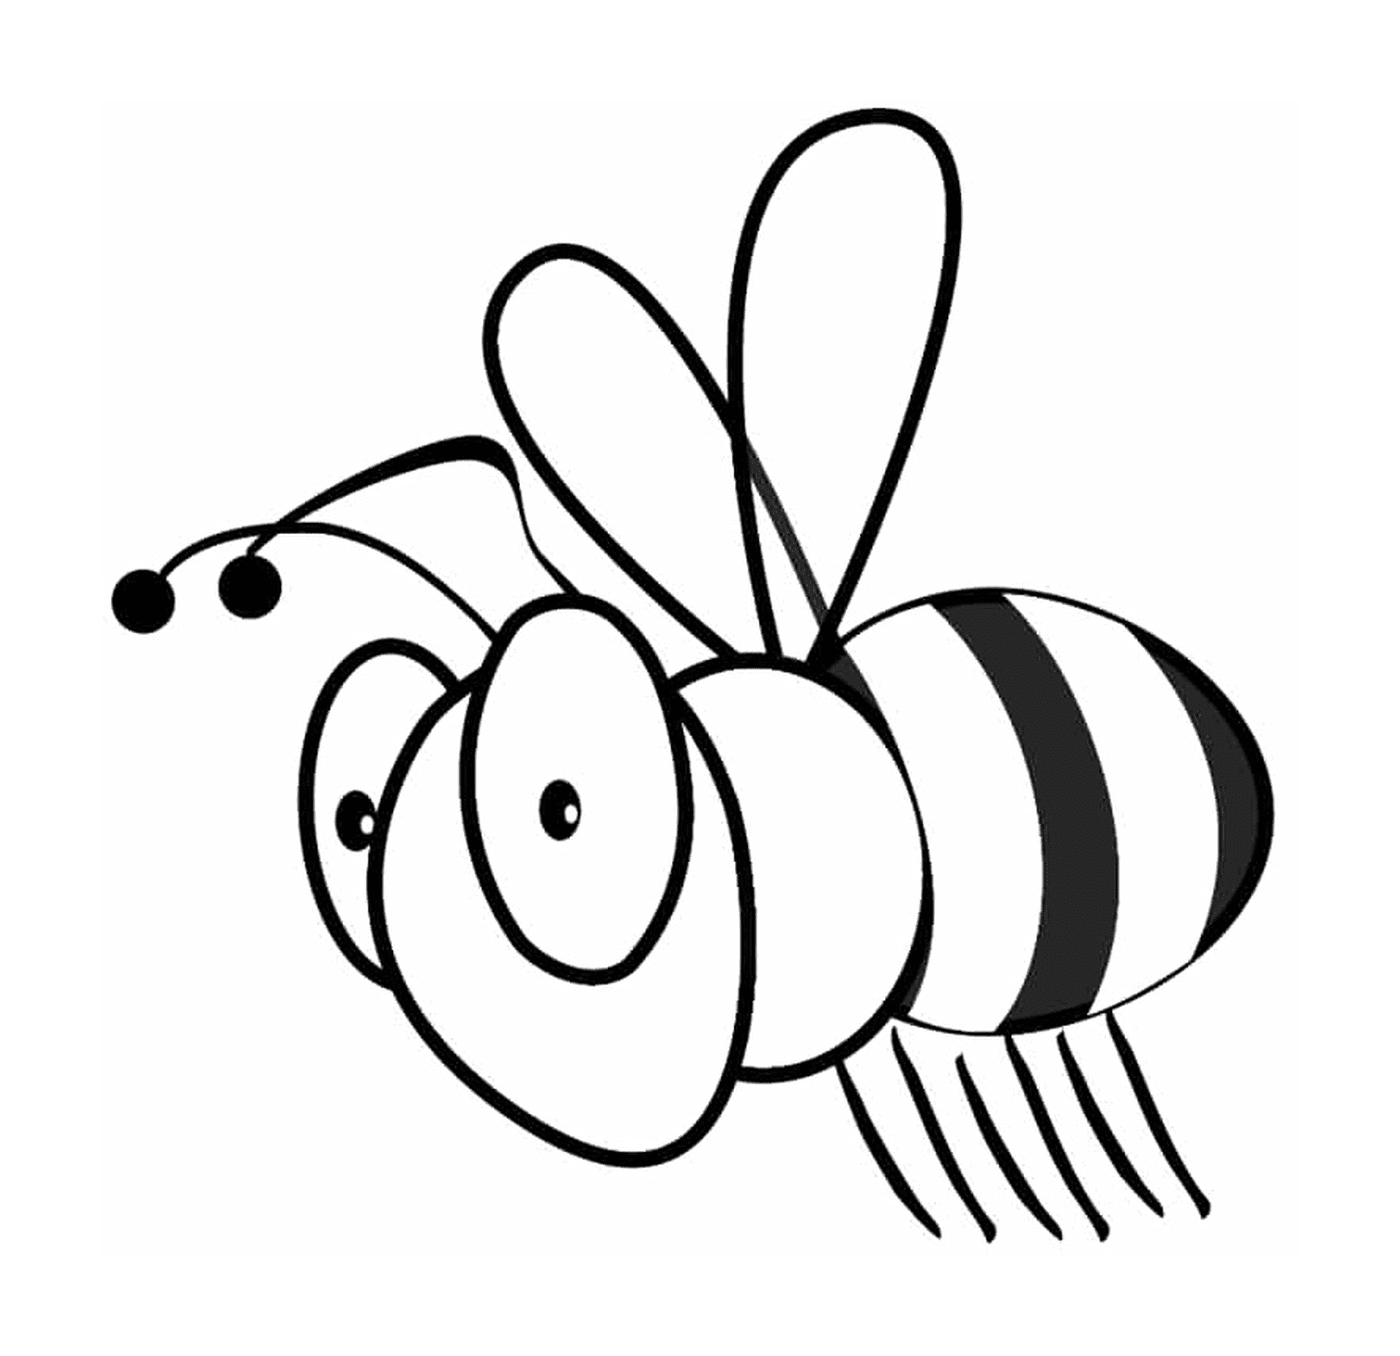  pequena abelha fofa 